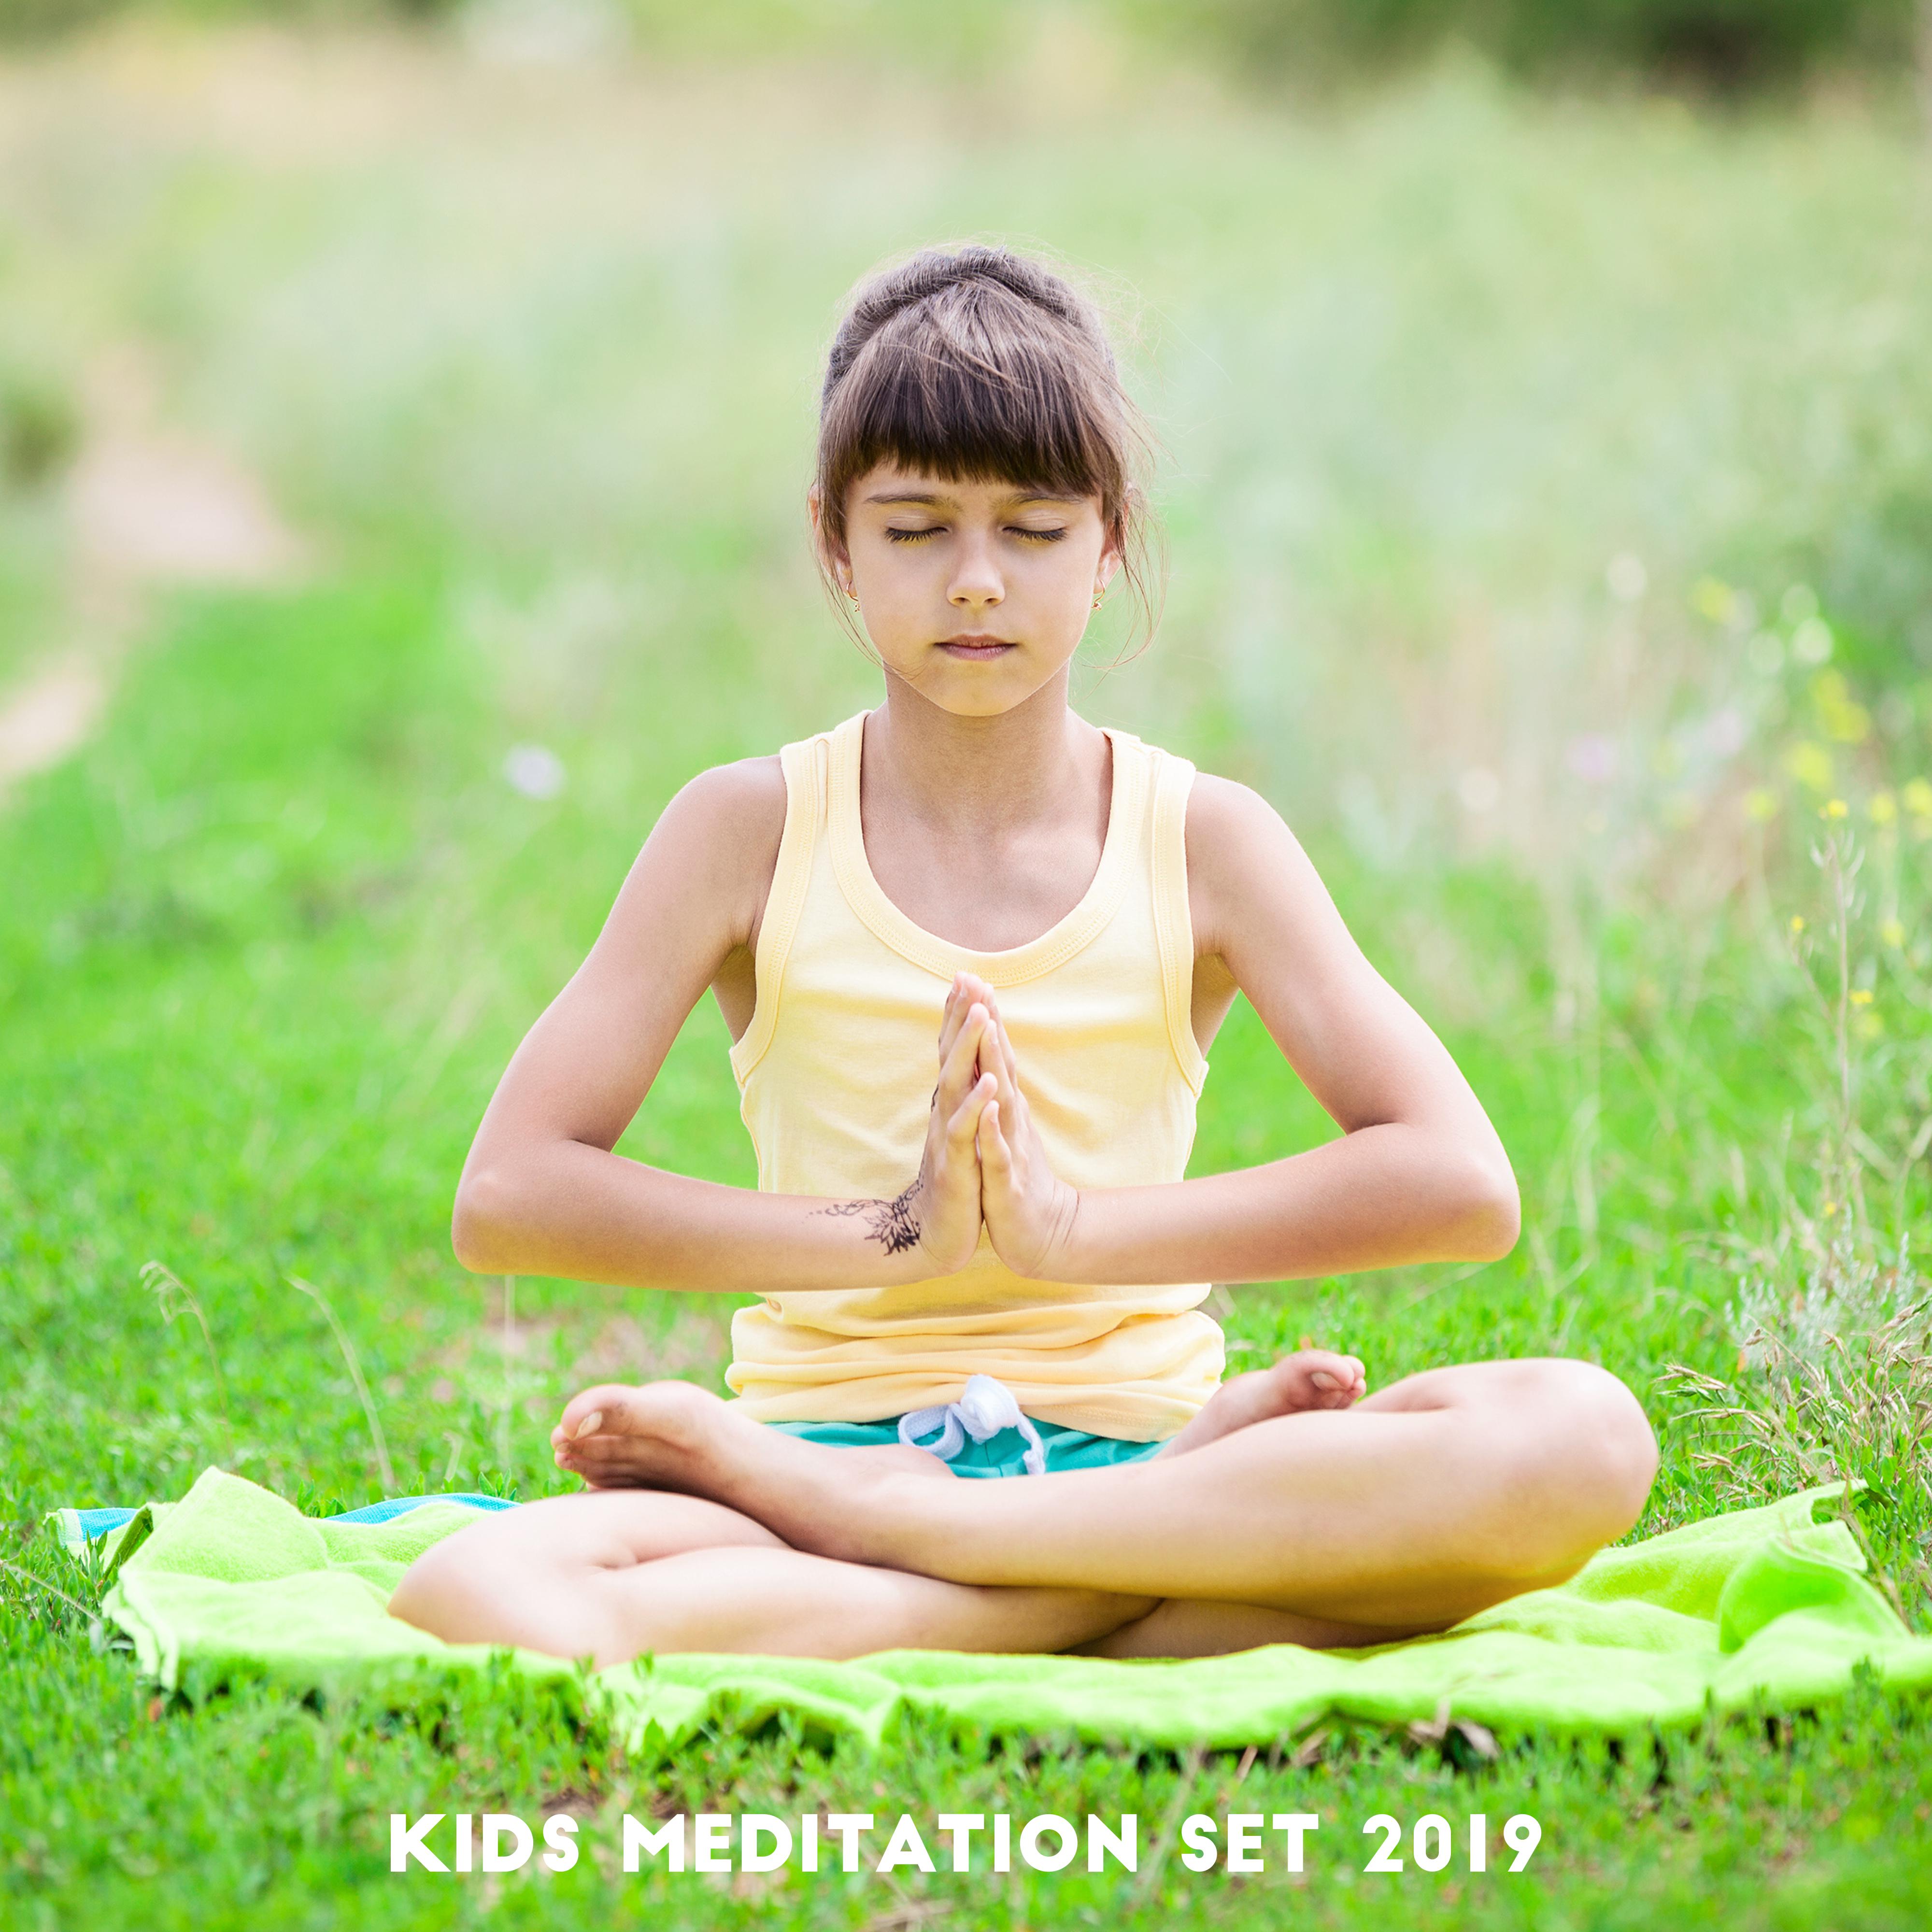 Kids Meditation Set 2019